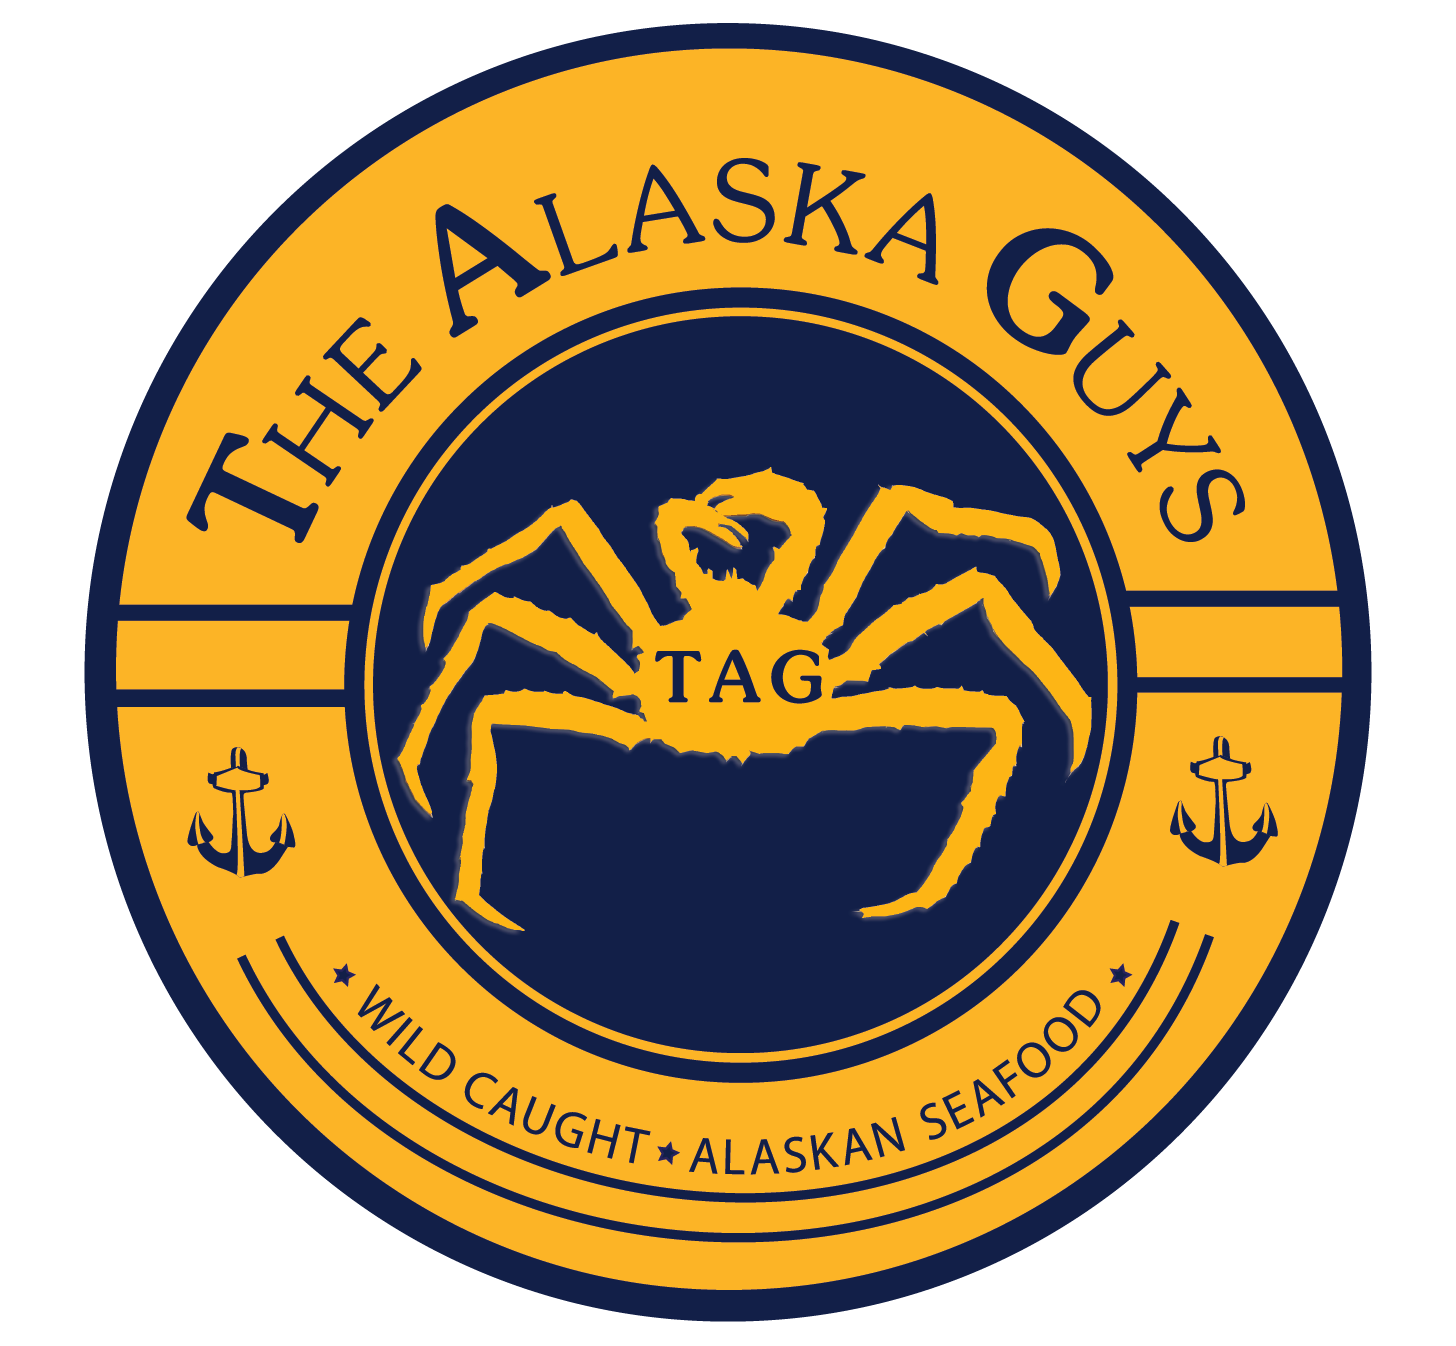 The Alaska Guys